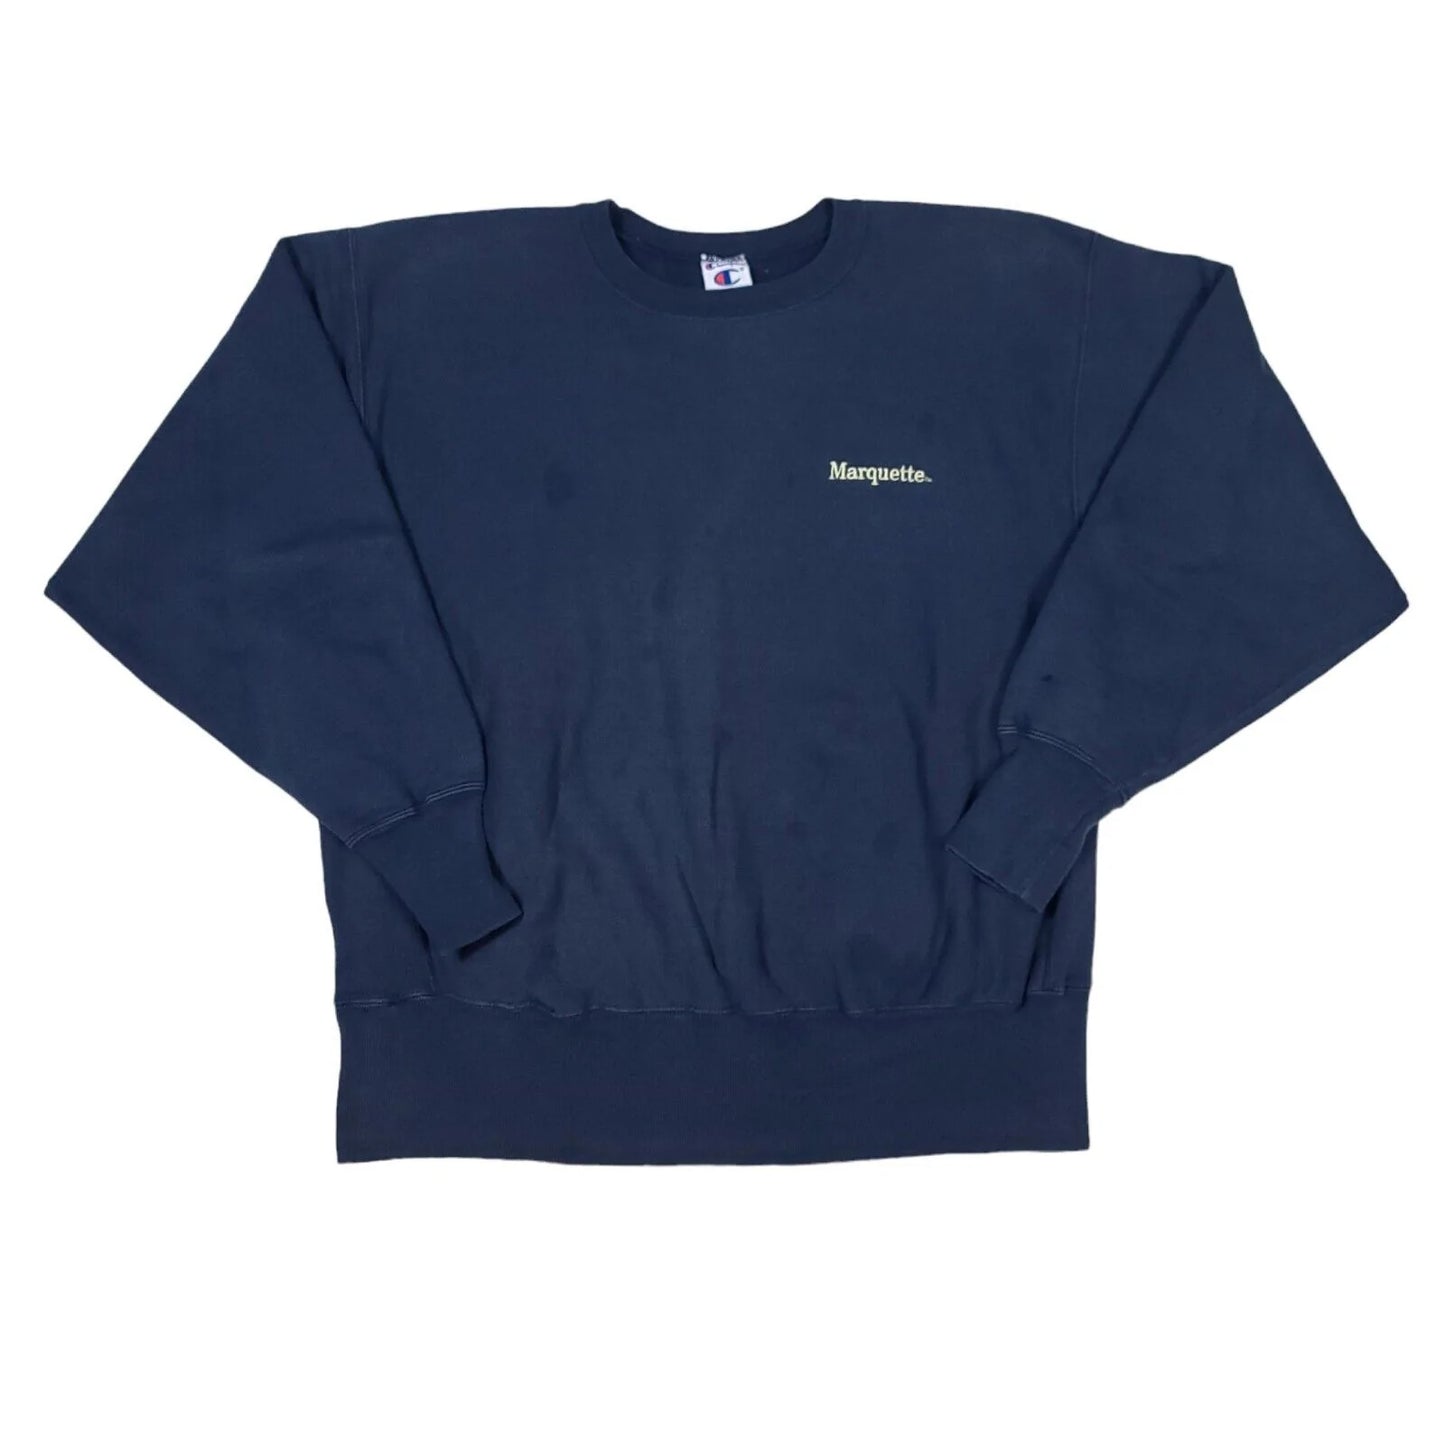 Vintage Marquette University Navy Blue Champion Reverse Weave Sweatshirt